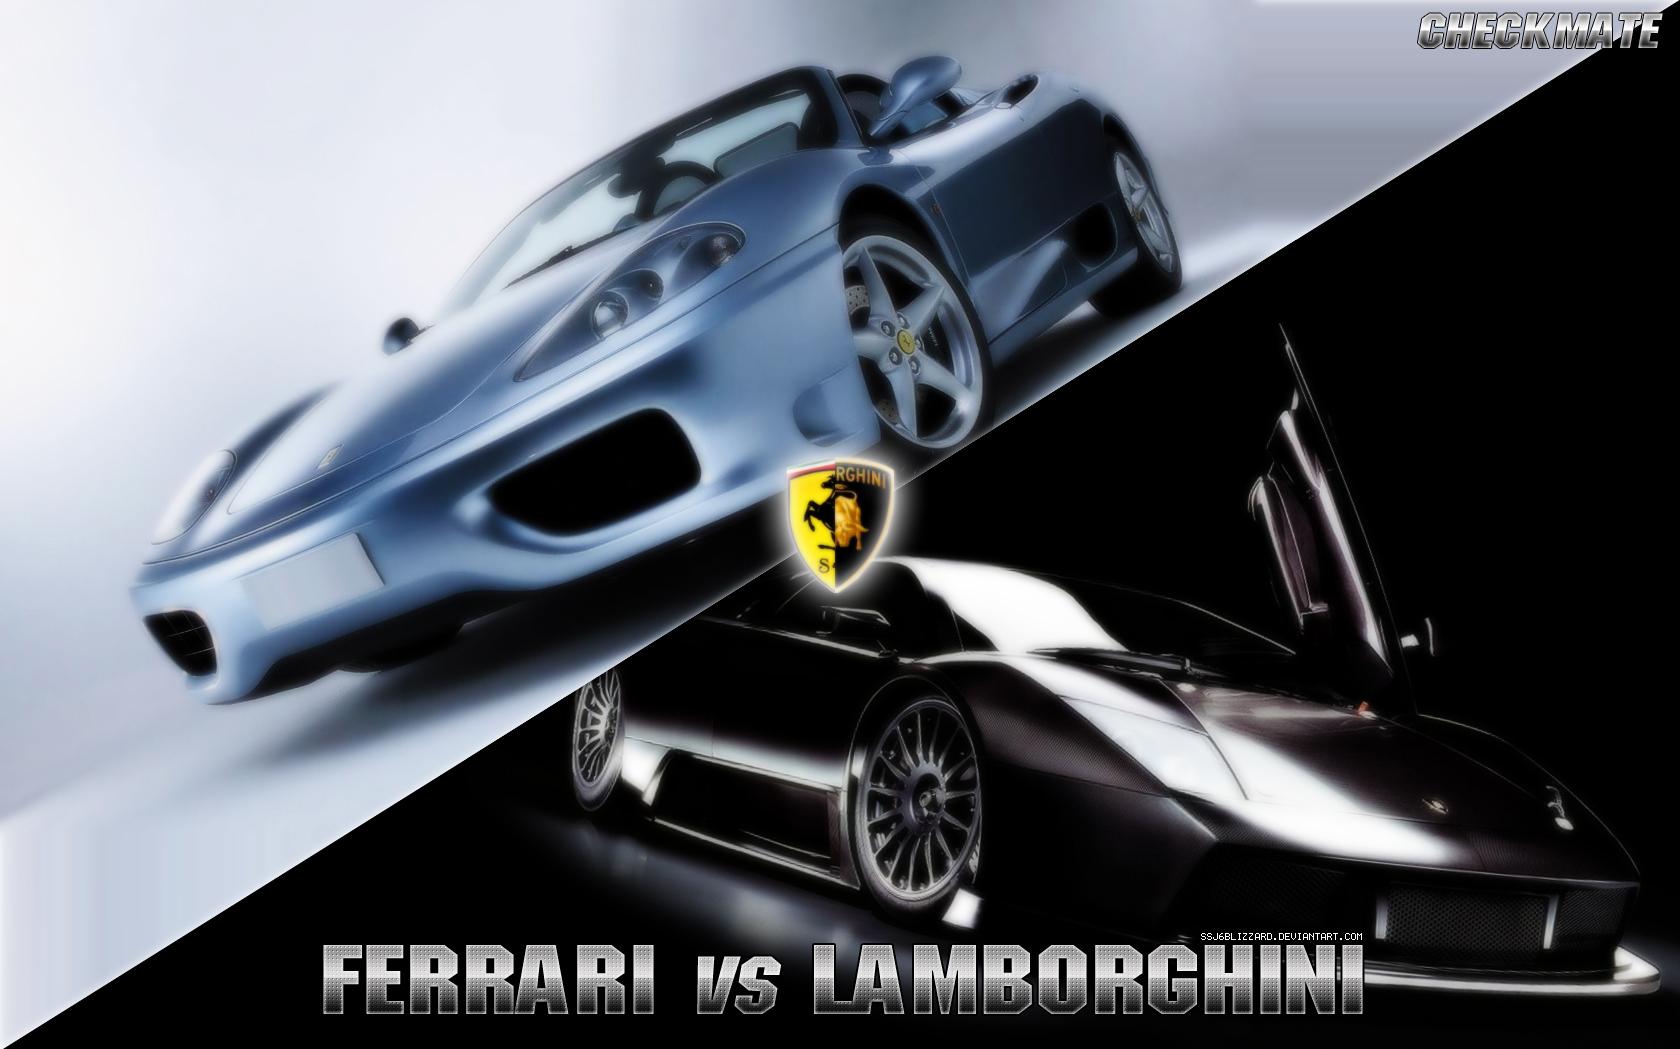 Ferrari VS Lamborghini by ssj6blizzard